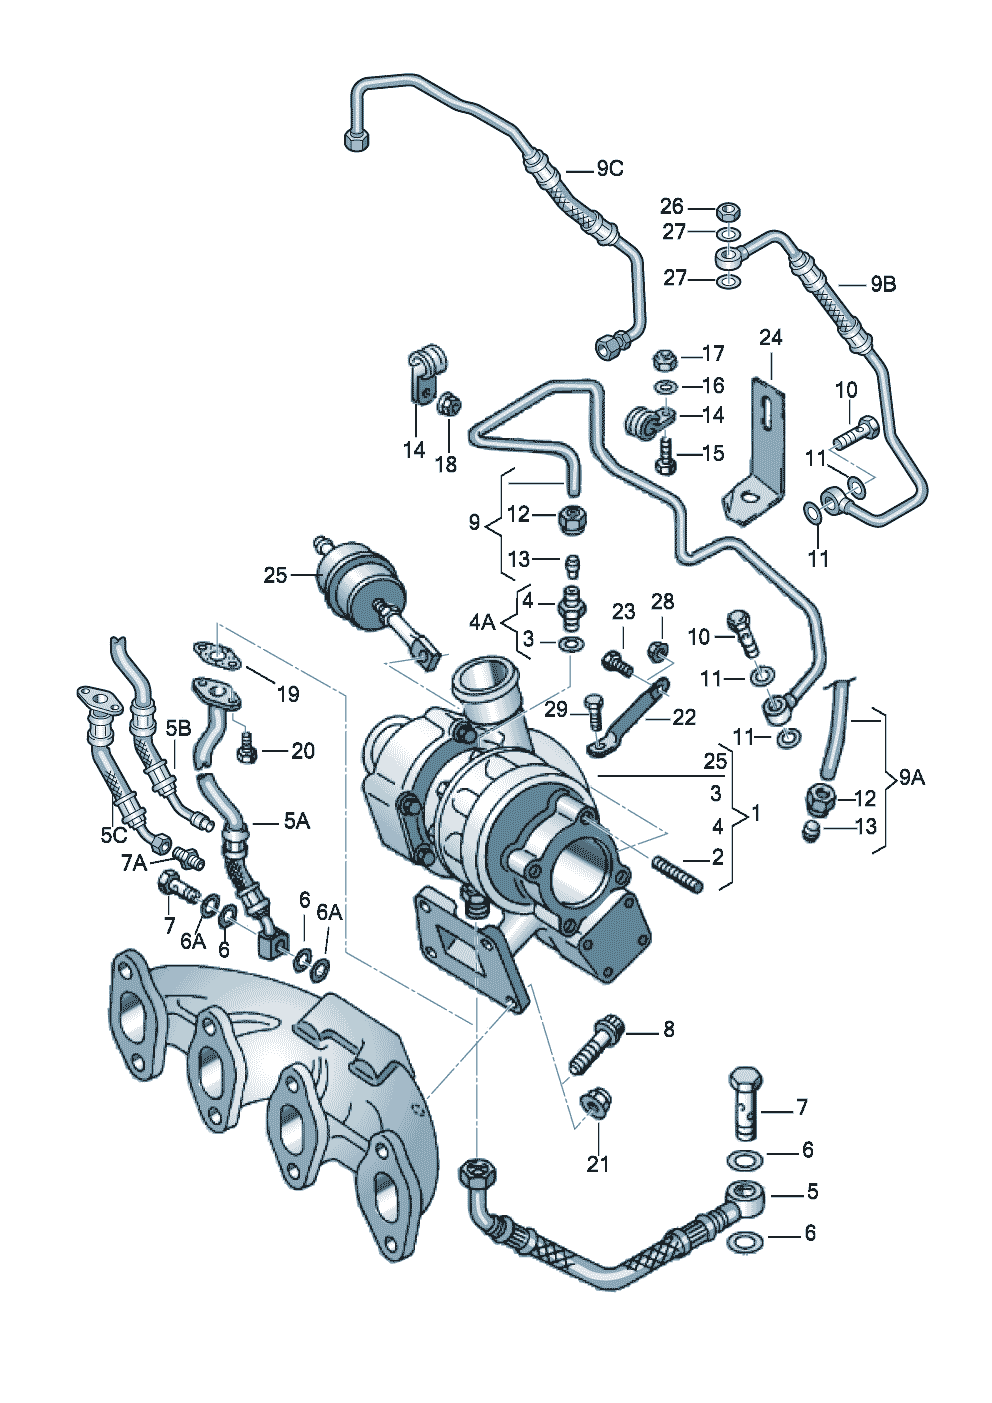 Exhaust gas turbocharger 1.9ltr. - Audi A4/Avant - a4